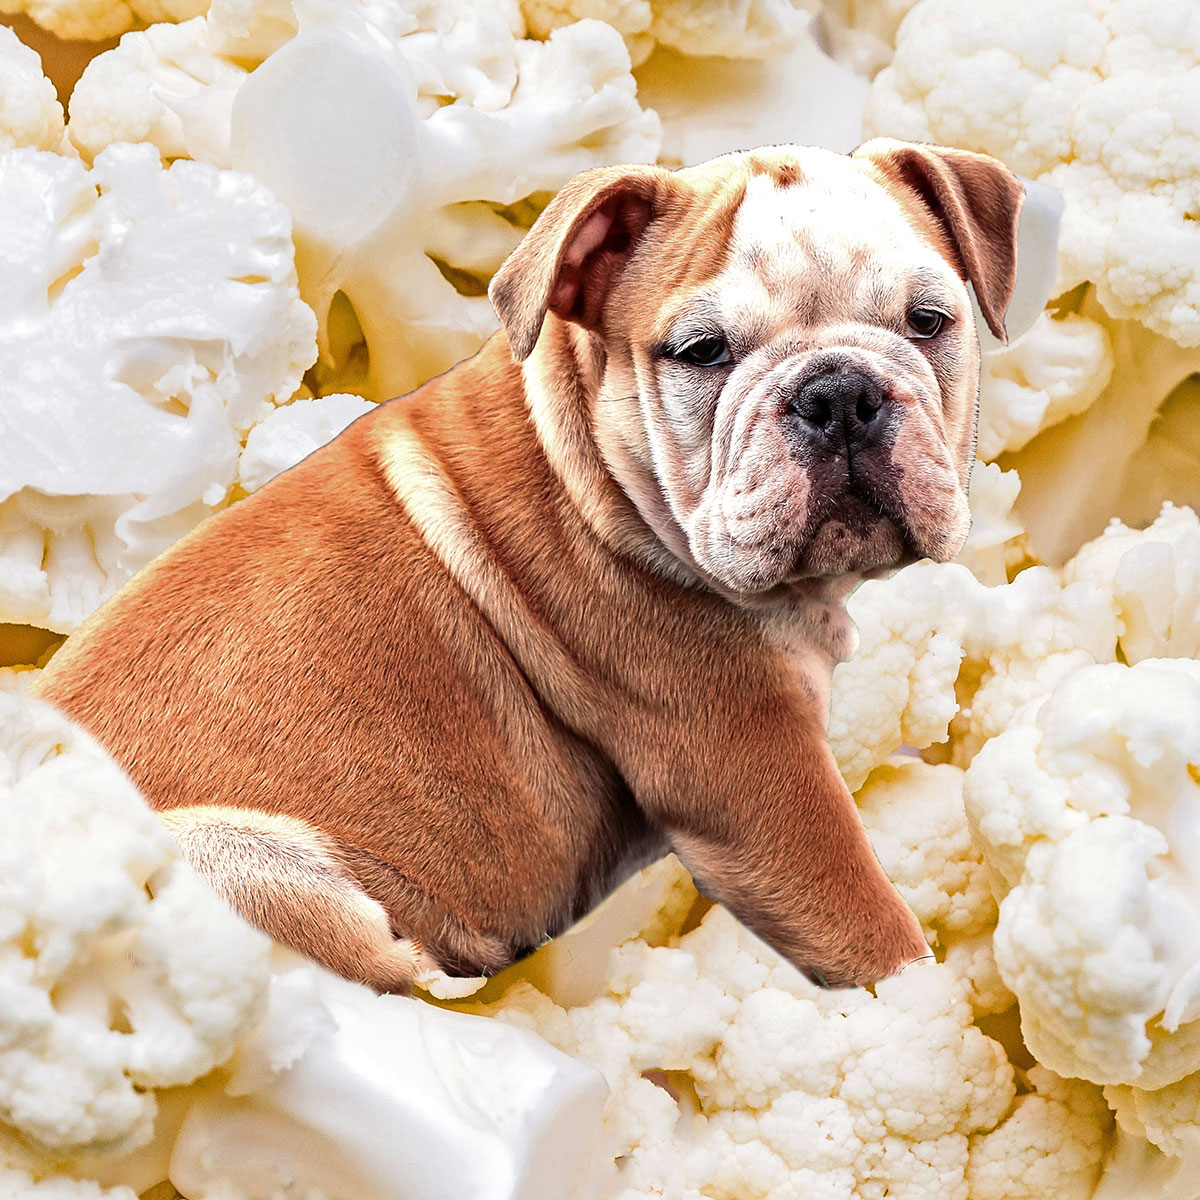 A bulldog sitting in a pile of cauliflower